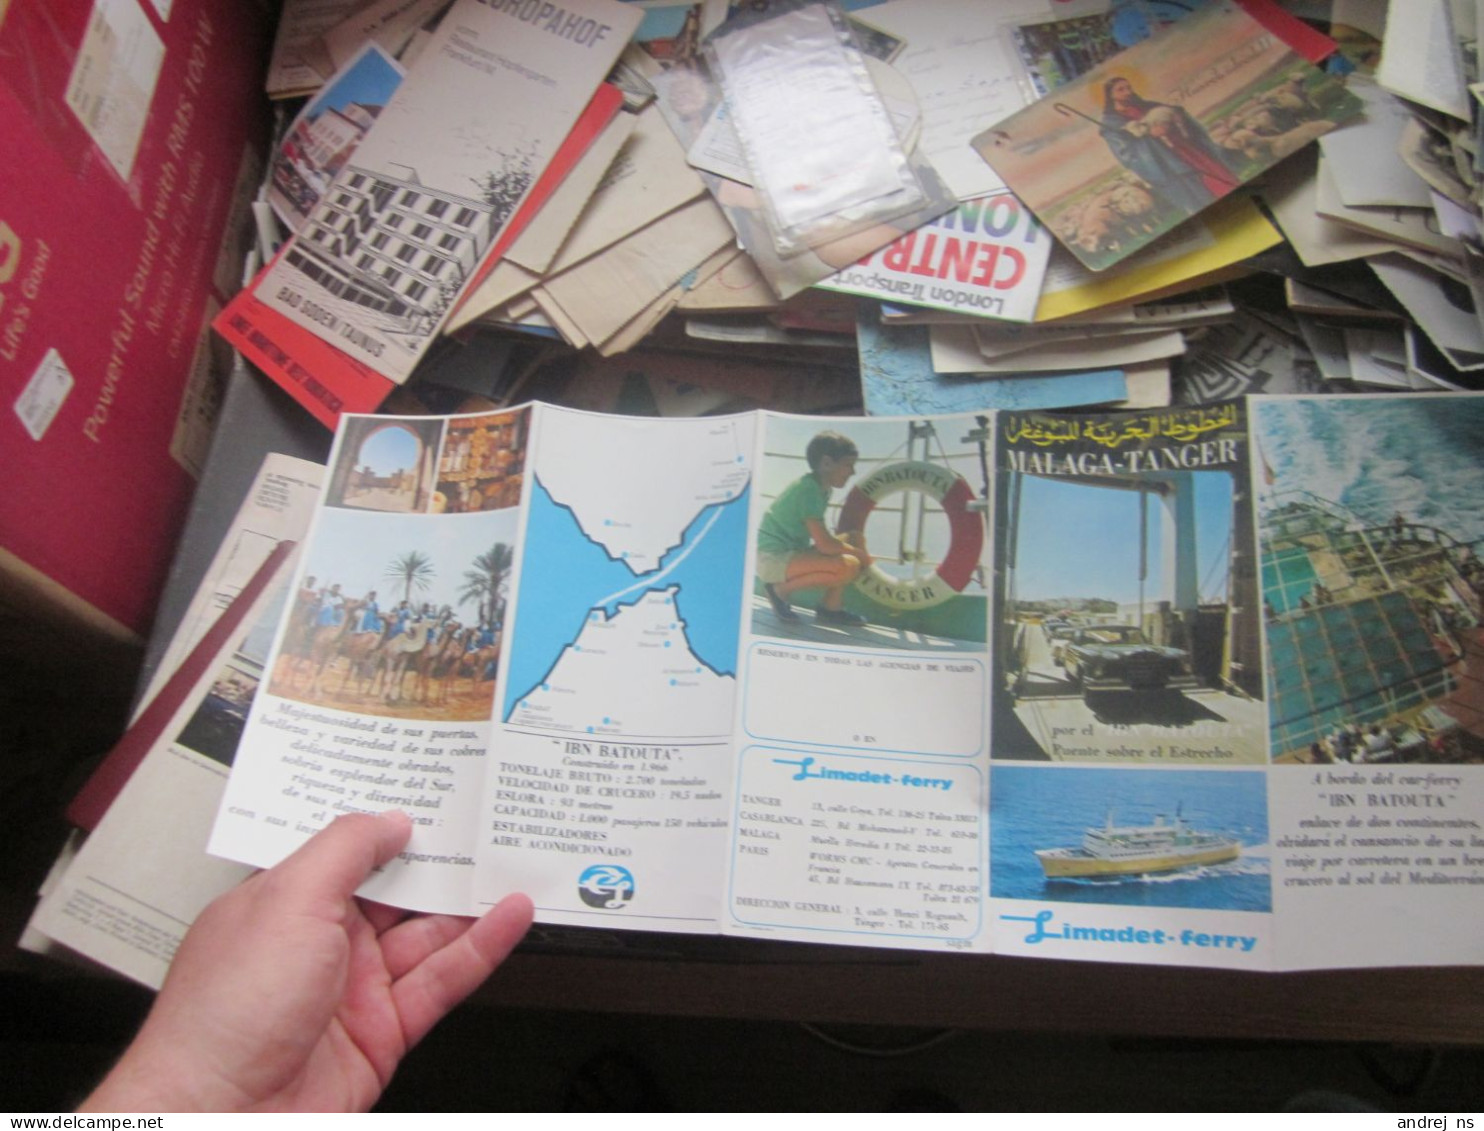 Malaga Tanger Limadet Ferry - Tourism Brochures